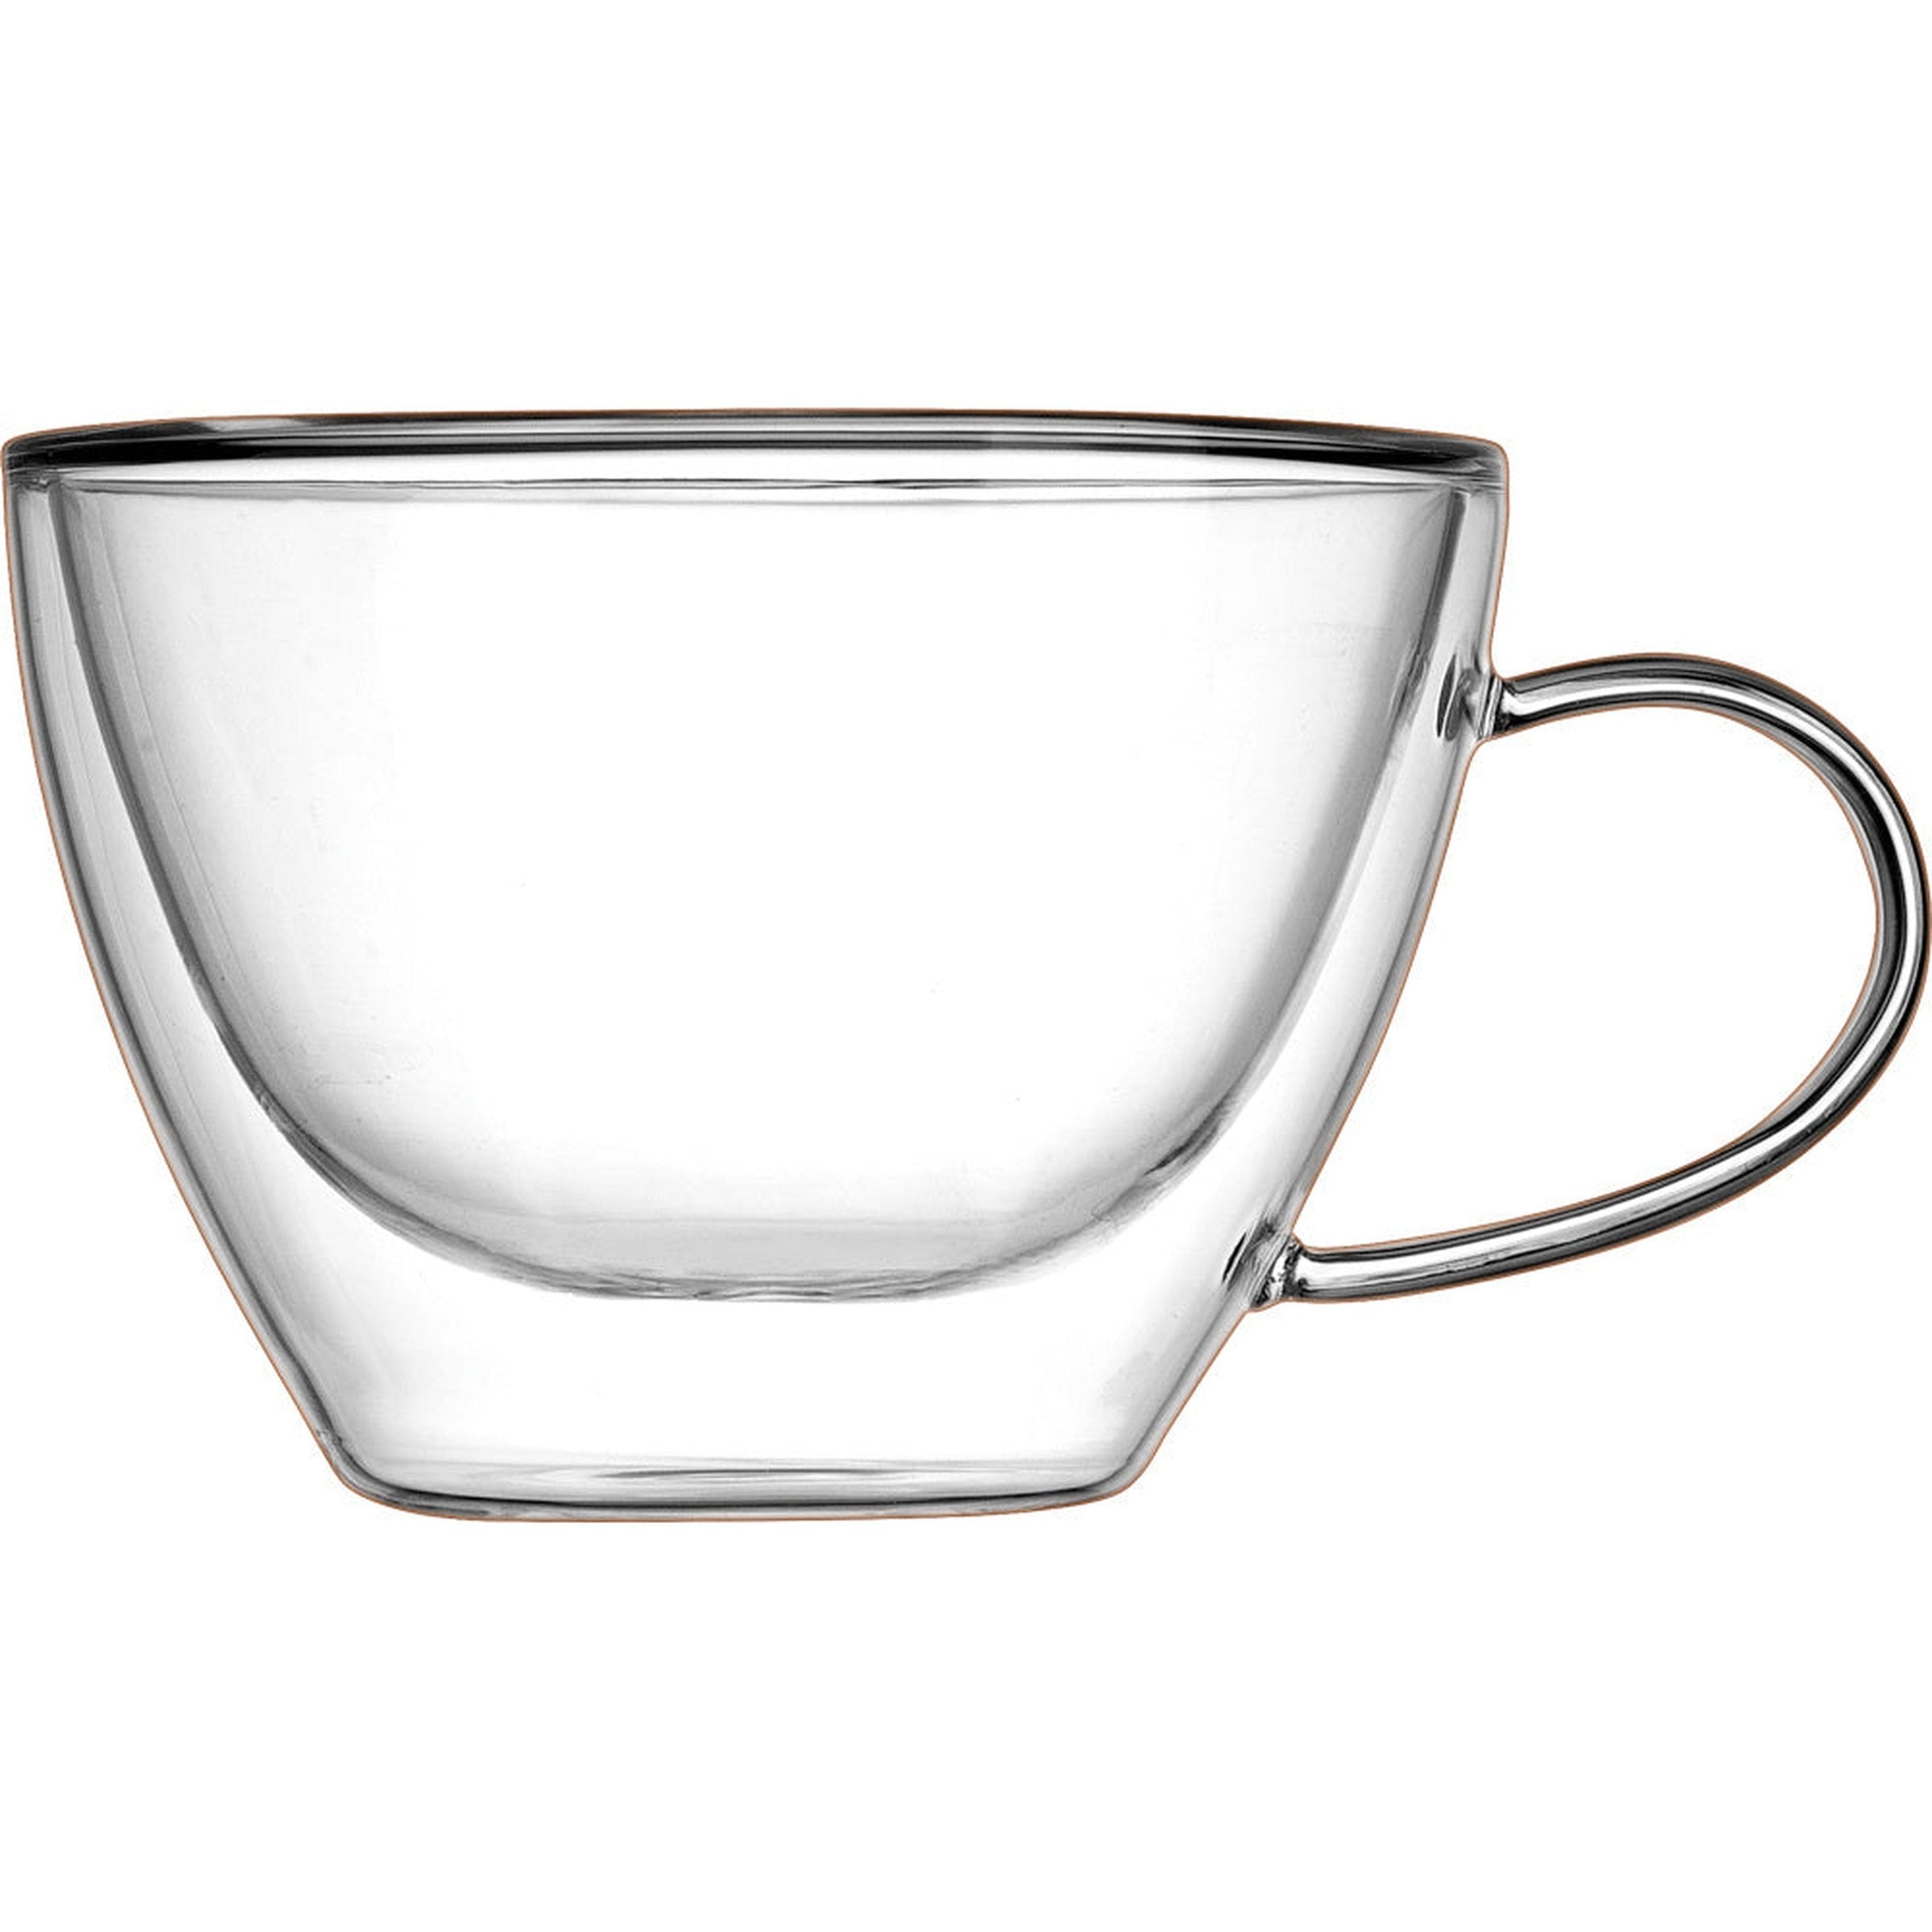 Godinger 18101 Doublewall Cappuccino Single Glass Coffee Mug, 11 oz